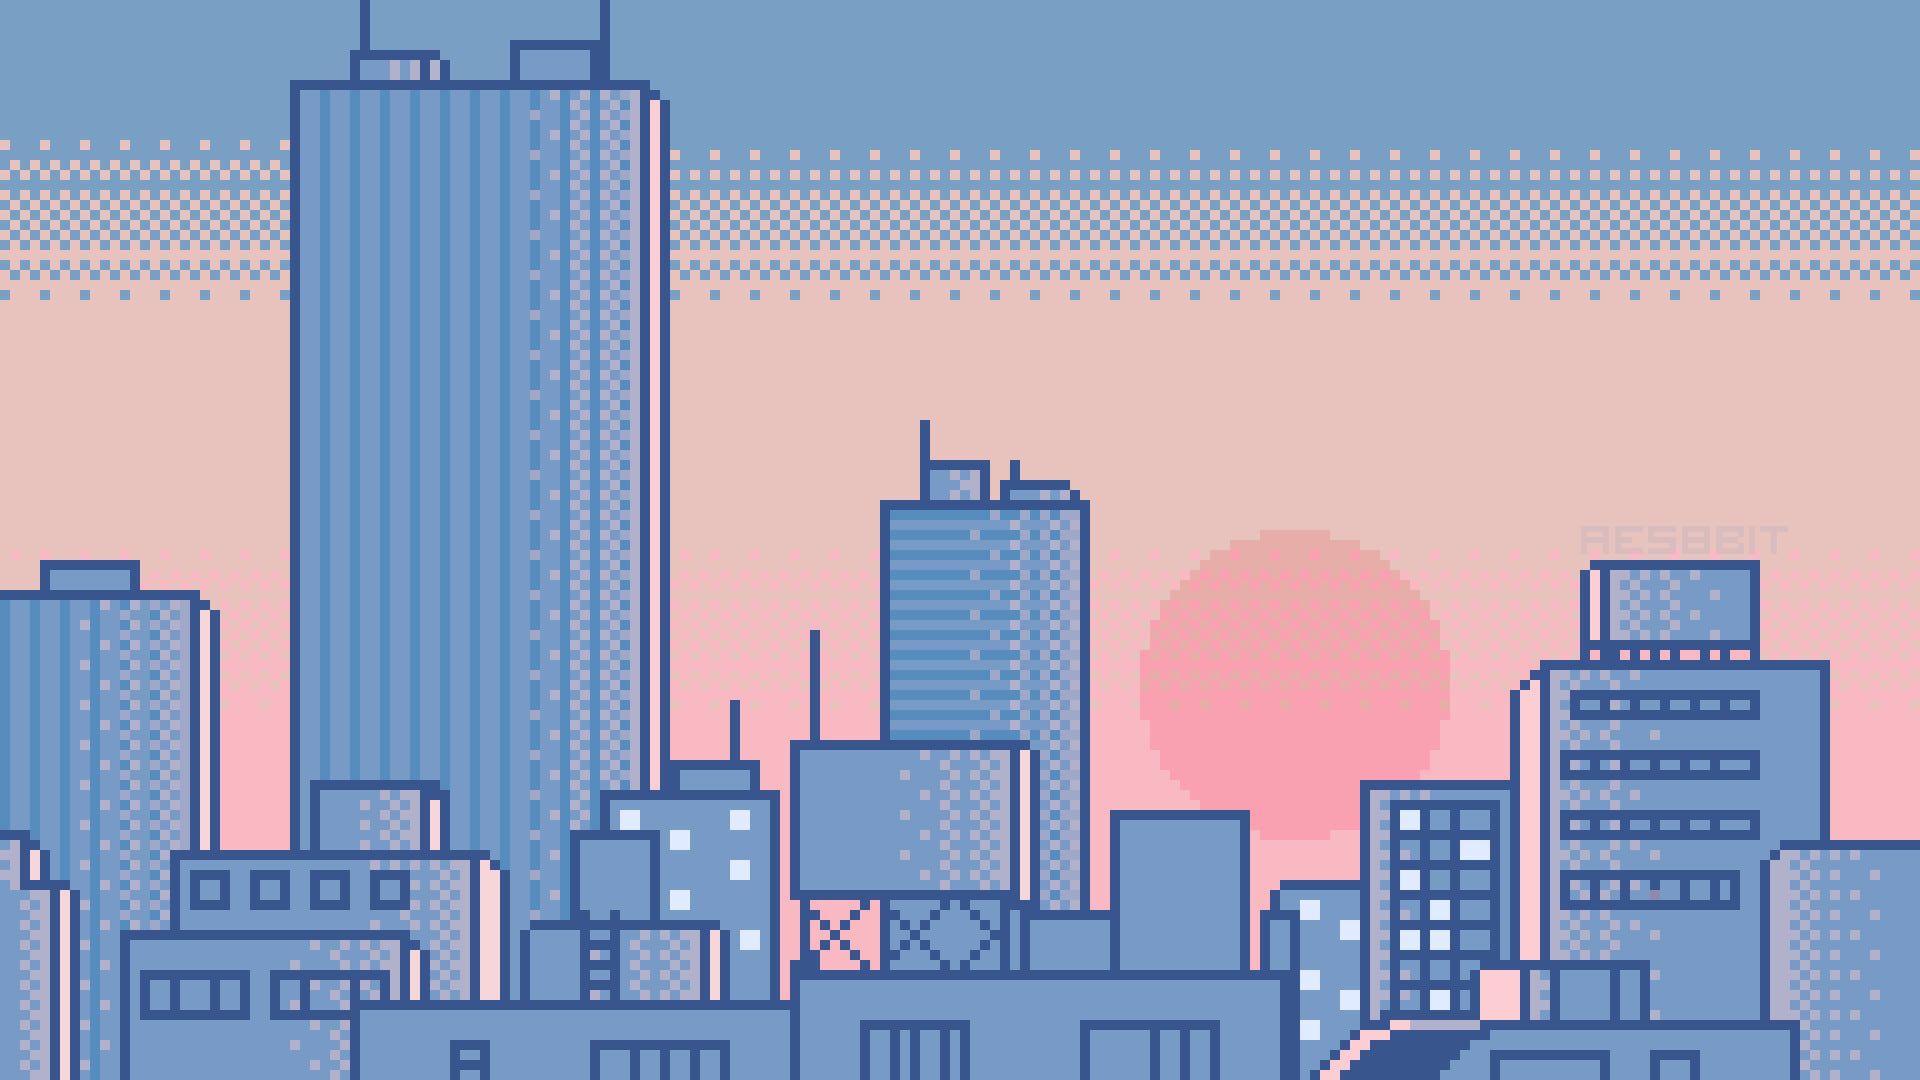 Pixel art cityscape with a pink and blue color scheme - Pixel art